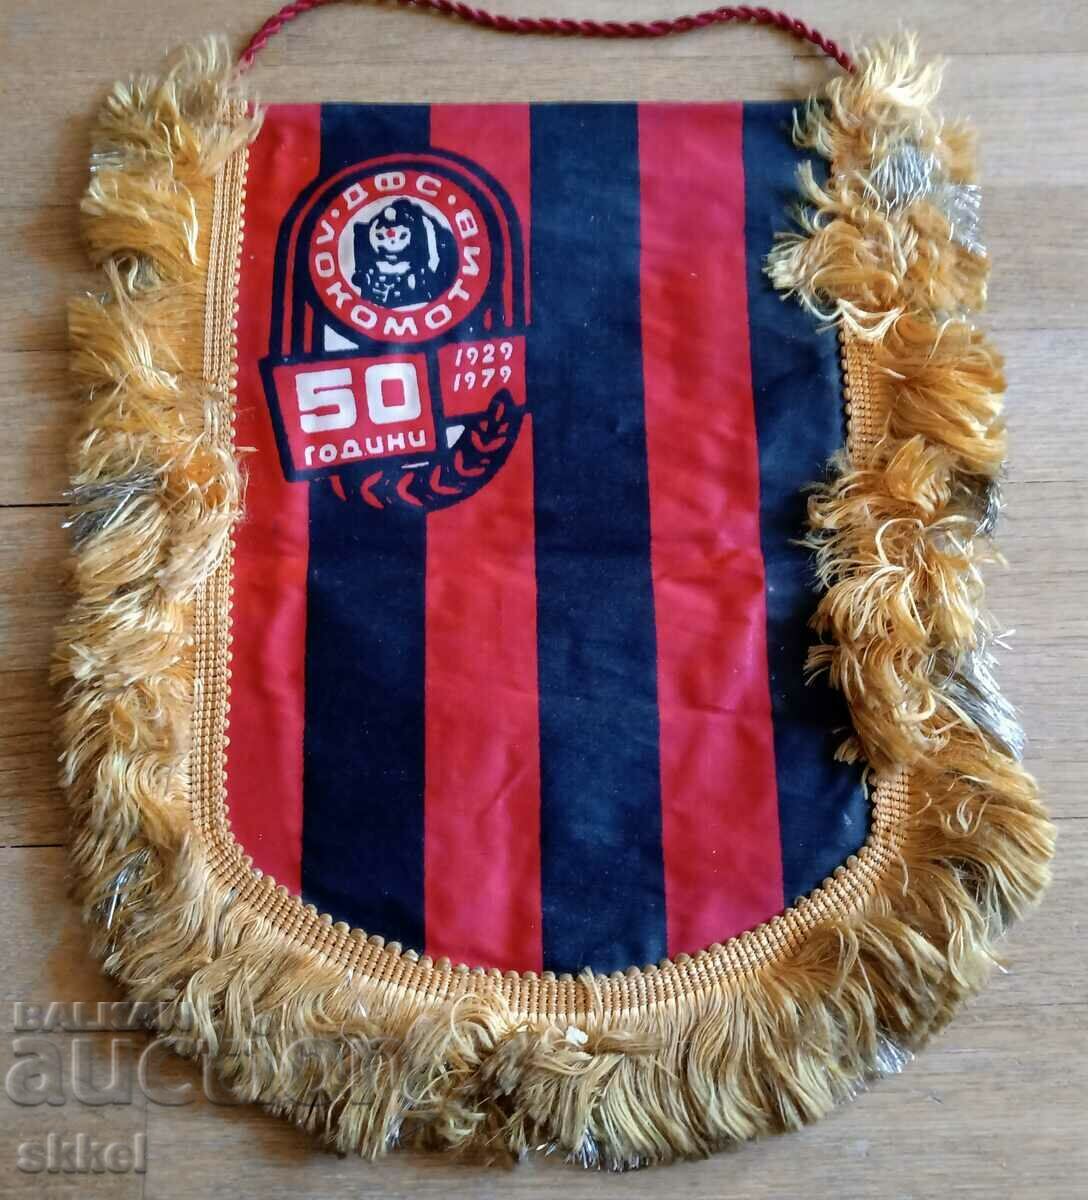 Steagul fotbal Lokomotiv Sofia steagul mare aniversare a 50-a aniversare 1979